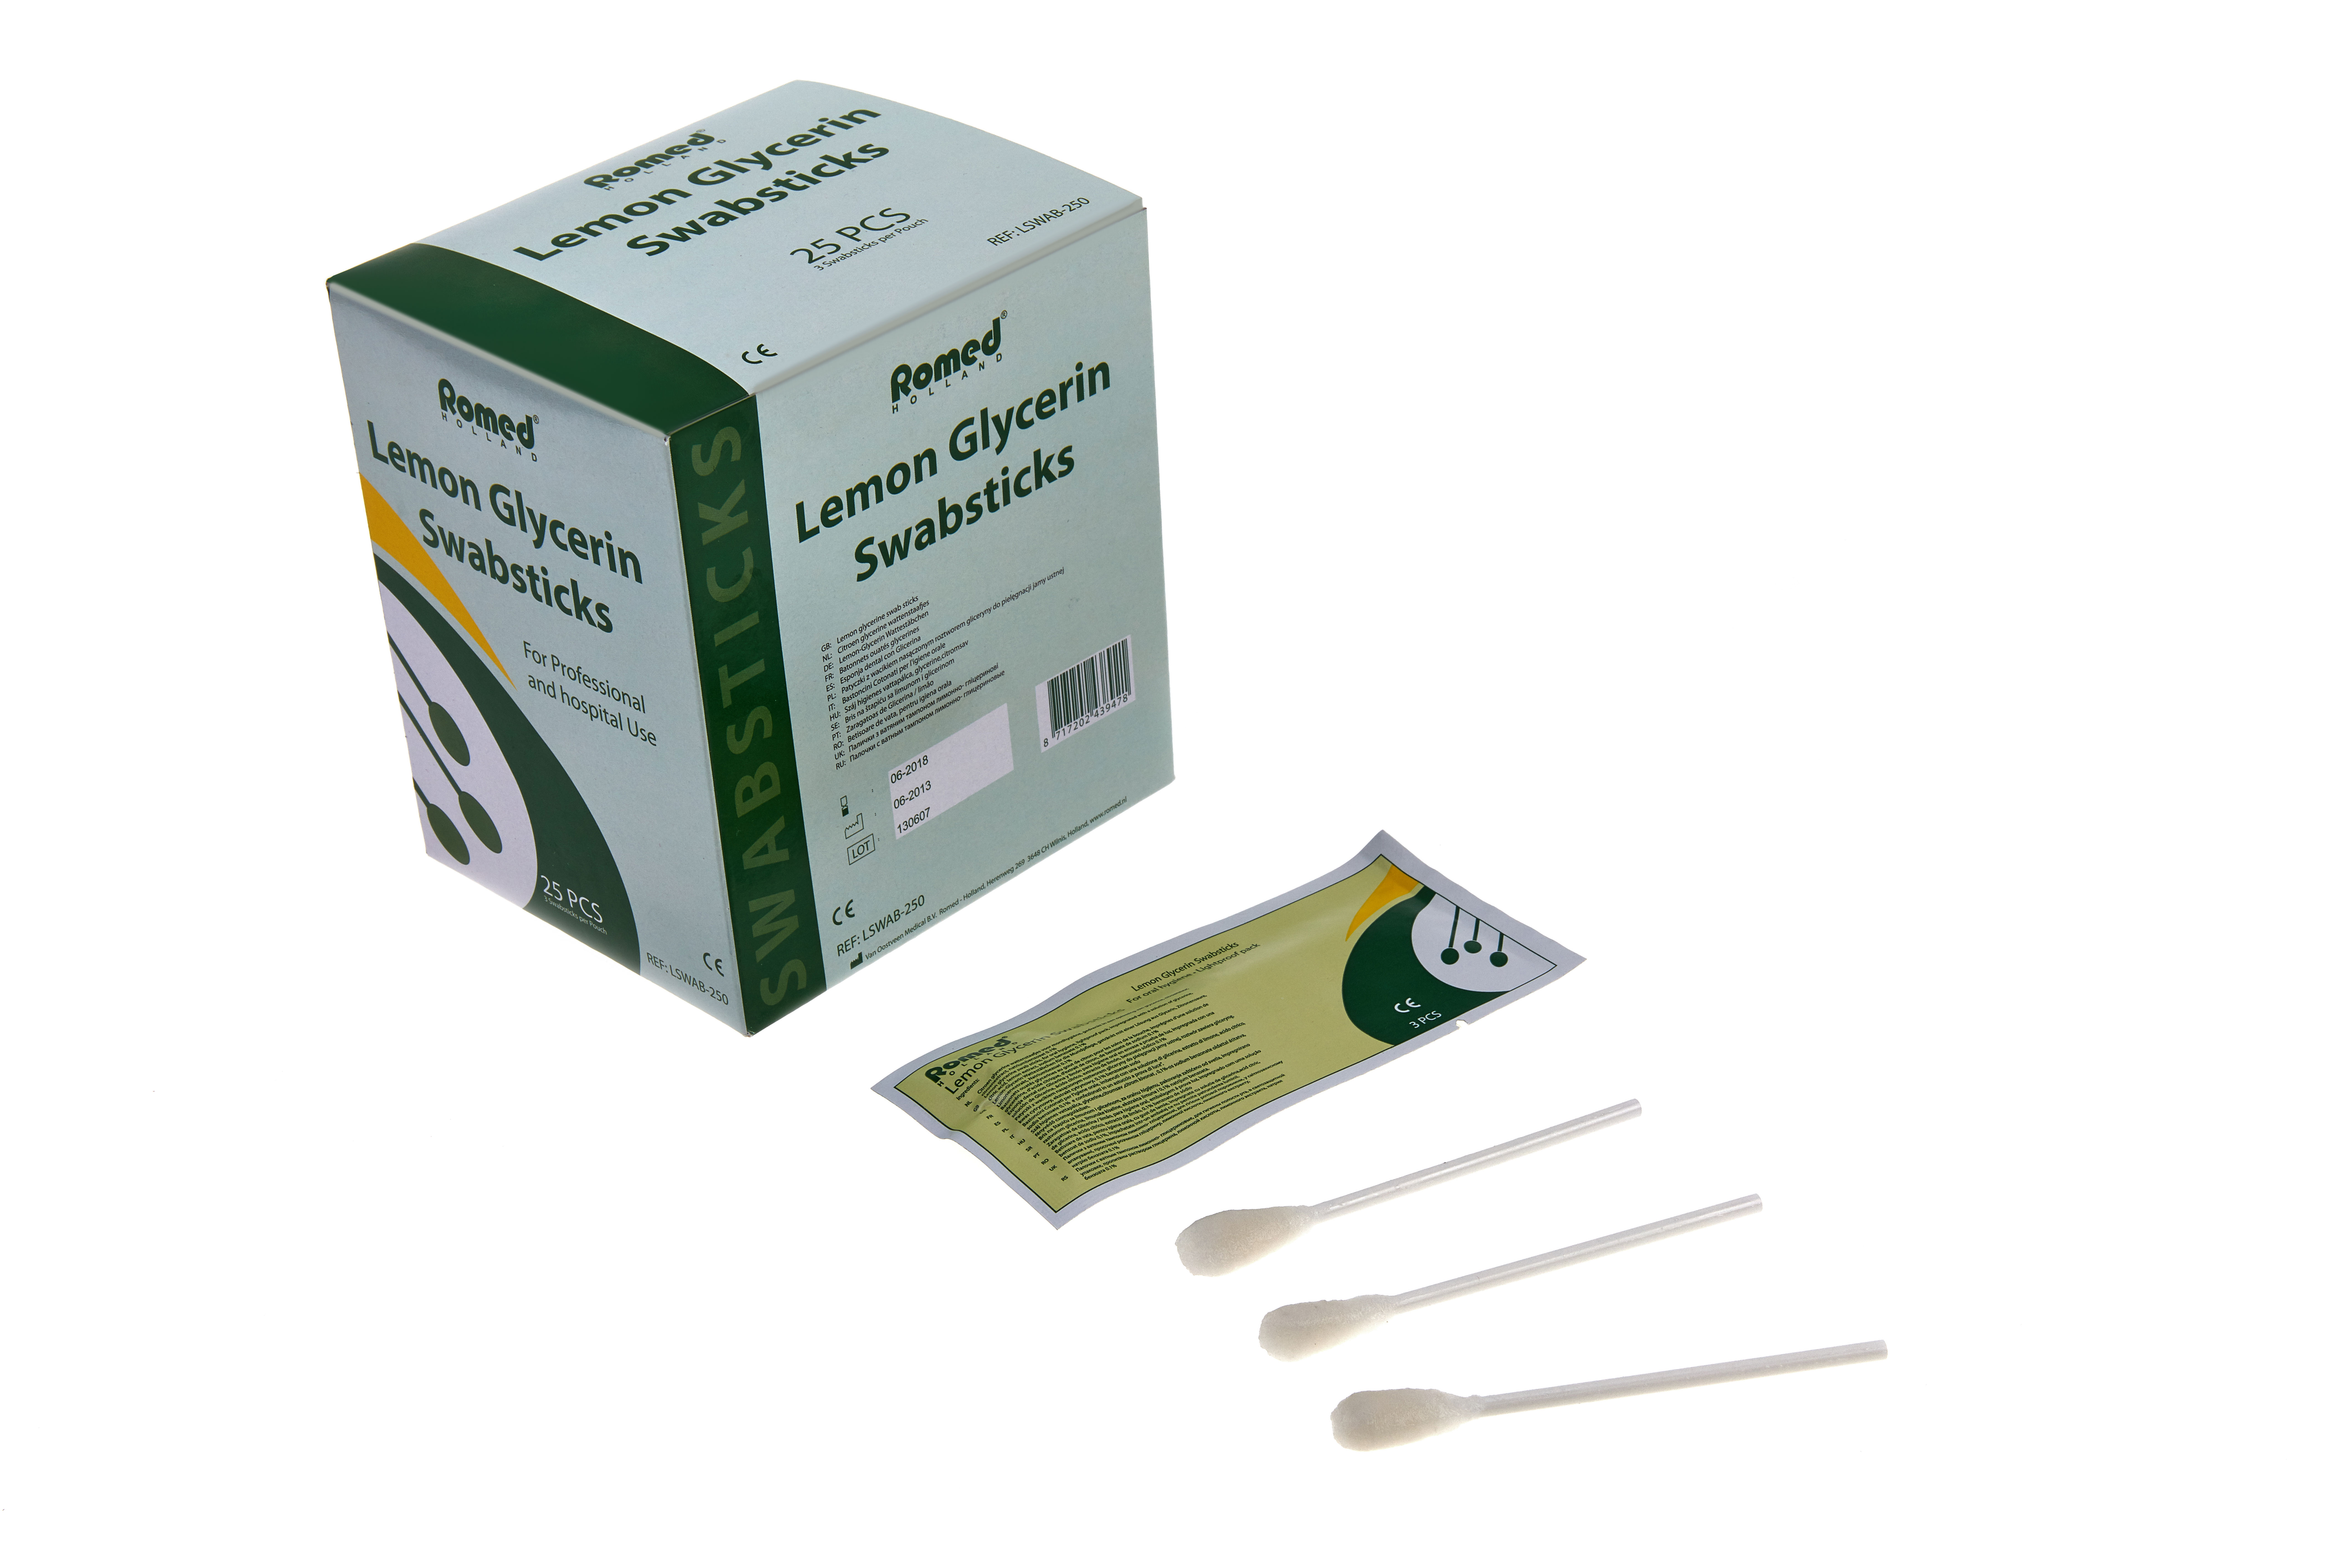 LSWAB-250 Romed lemon glycerine swab sticks, for oral hygiëne, 3 pcs in foil pack, 25 foil packs per inner box, 10 x 25 pcs = 250 pcs (foil packs) in a carton.